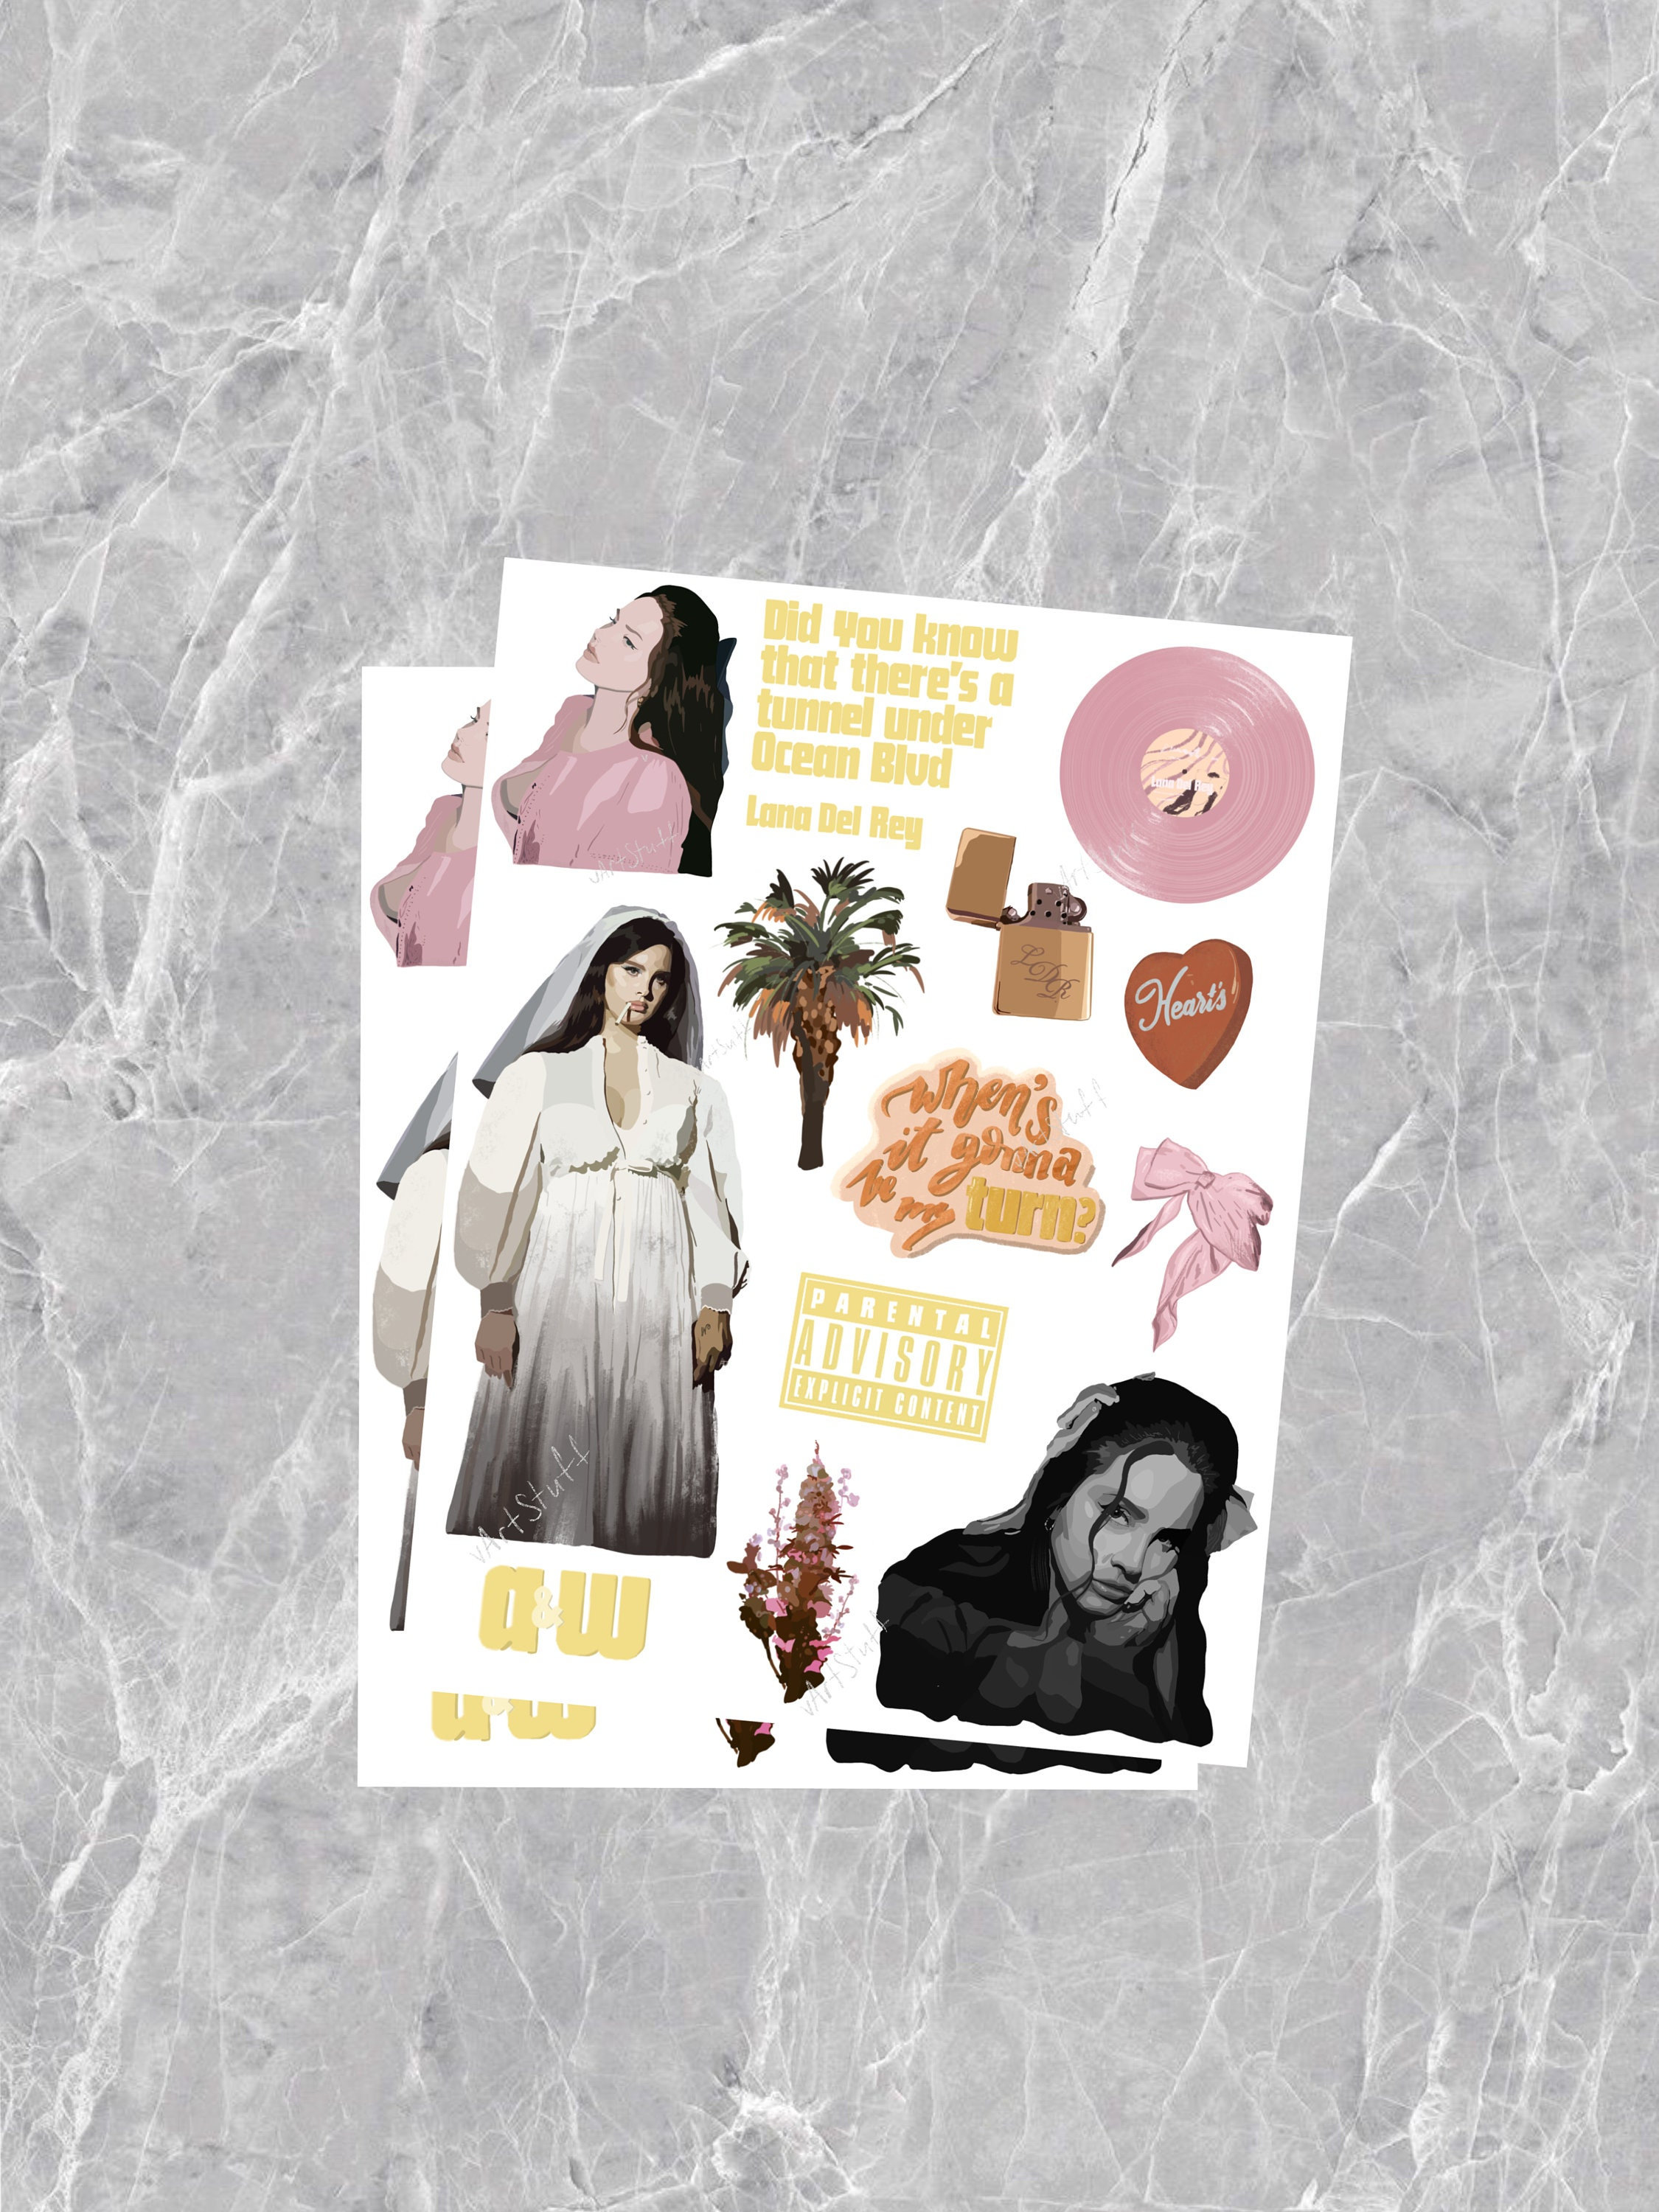 50Pcs Singer Lana Del Rey Stickers, Lana Del Rey stickers 2023, LDR st -  0nlyshirt